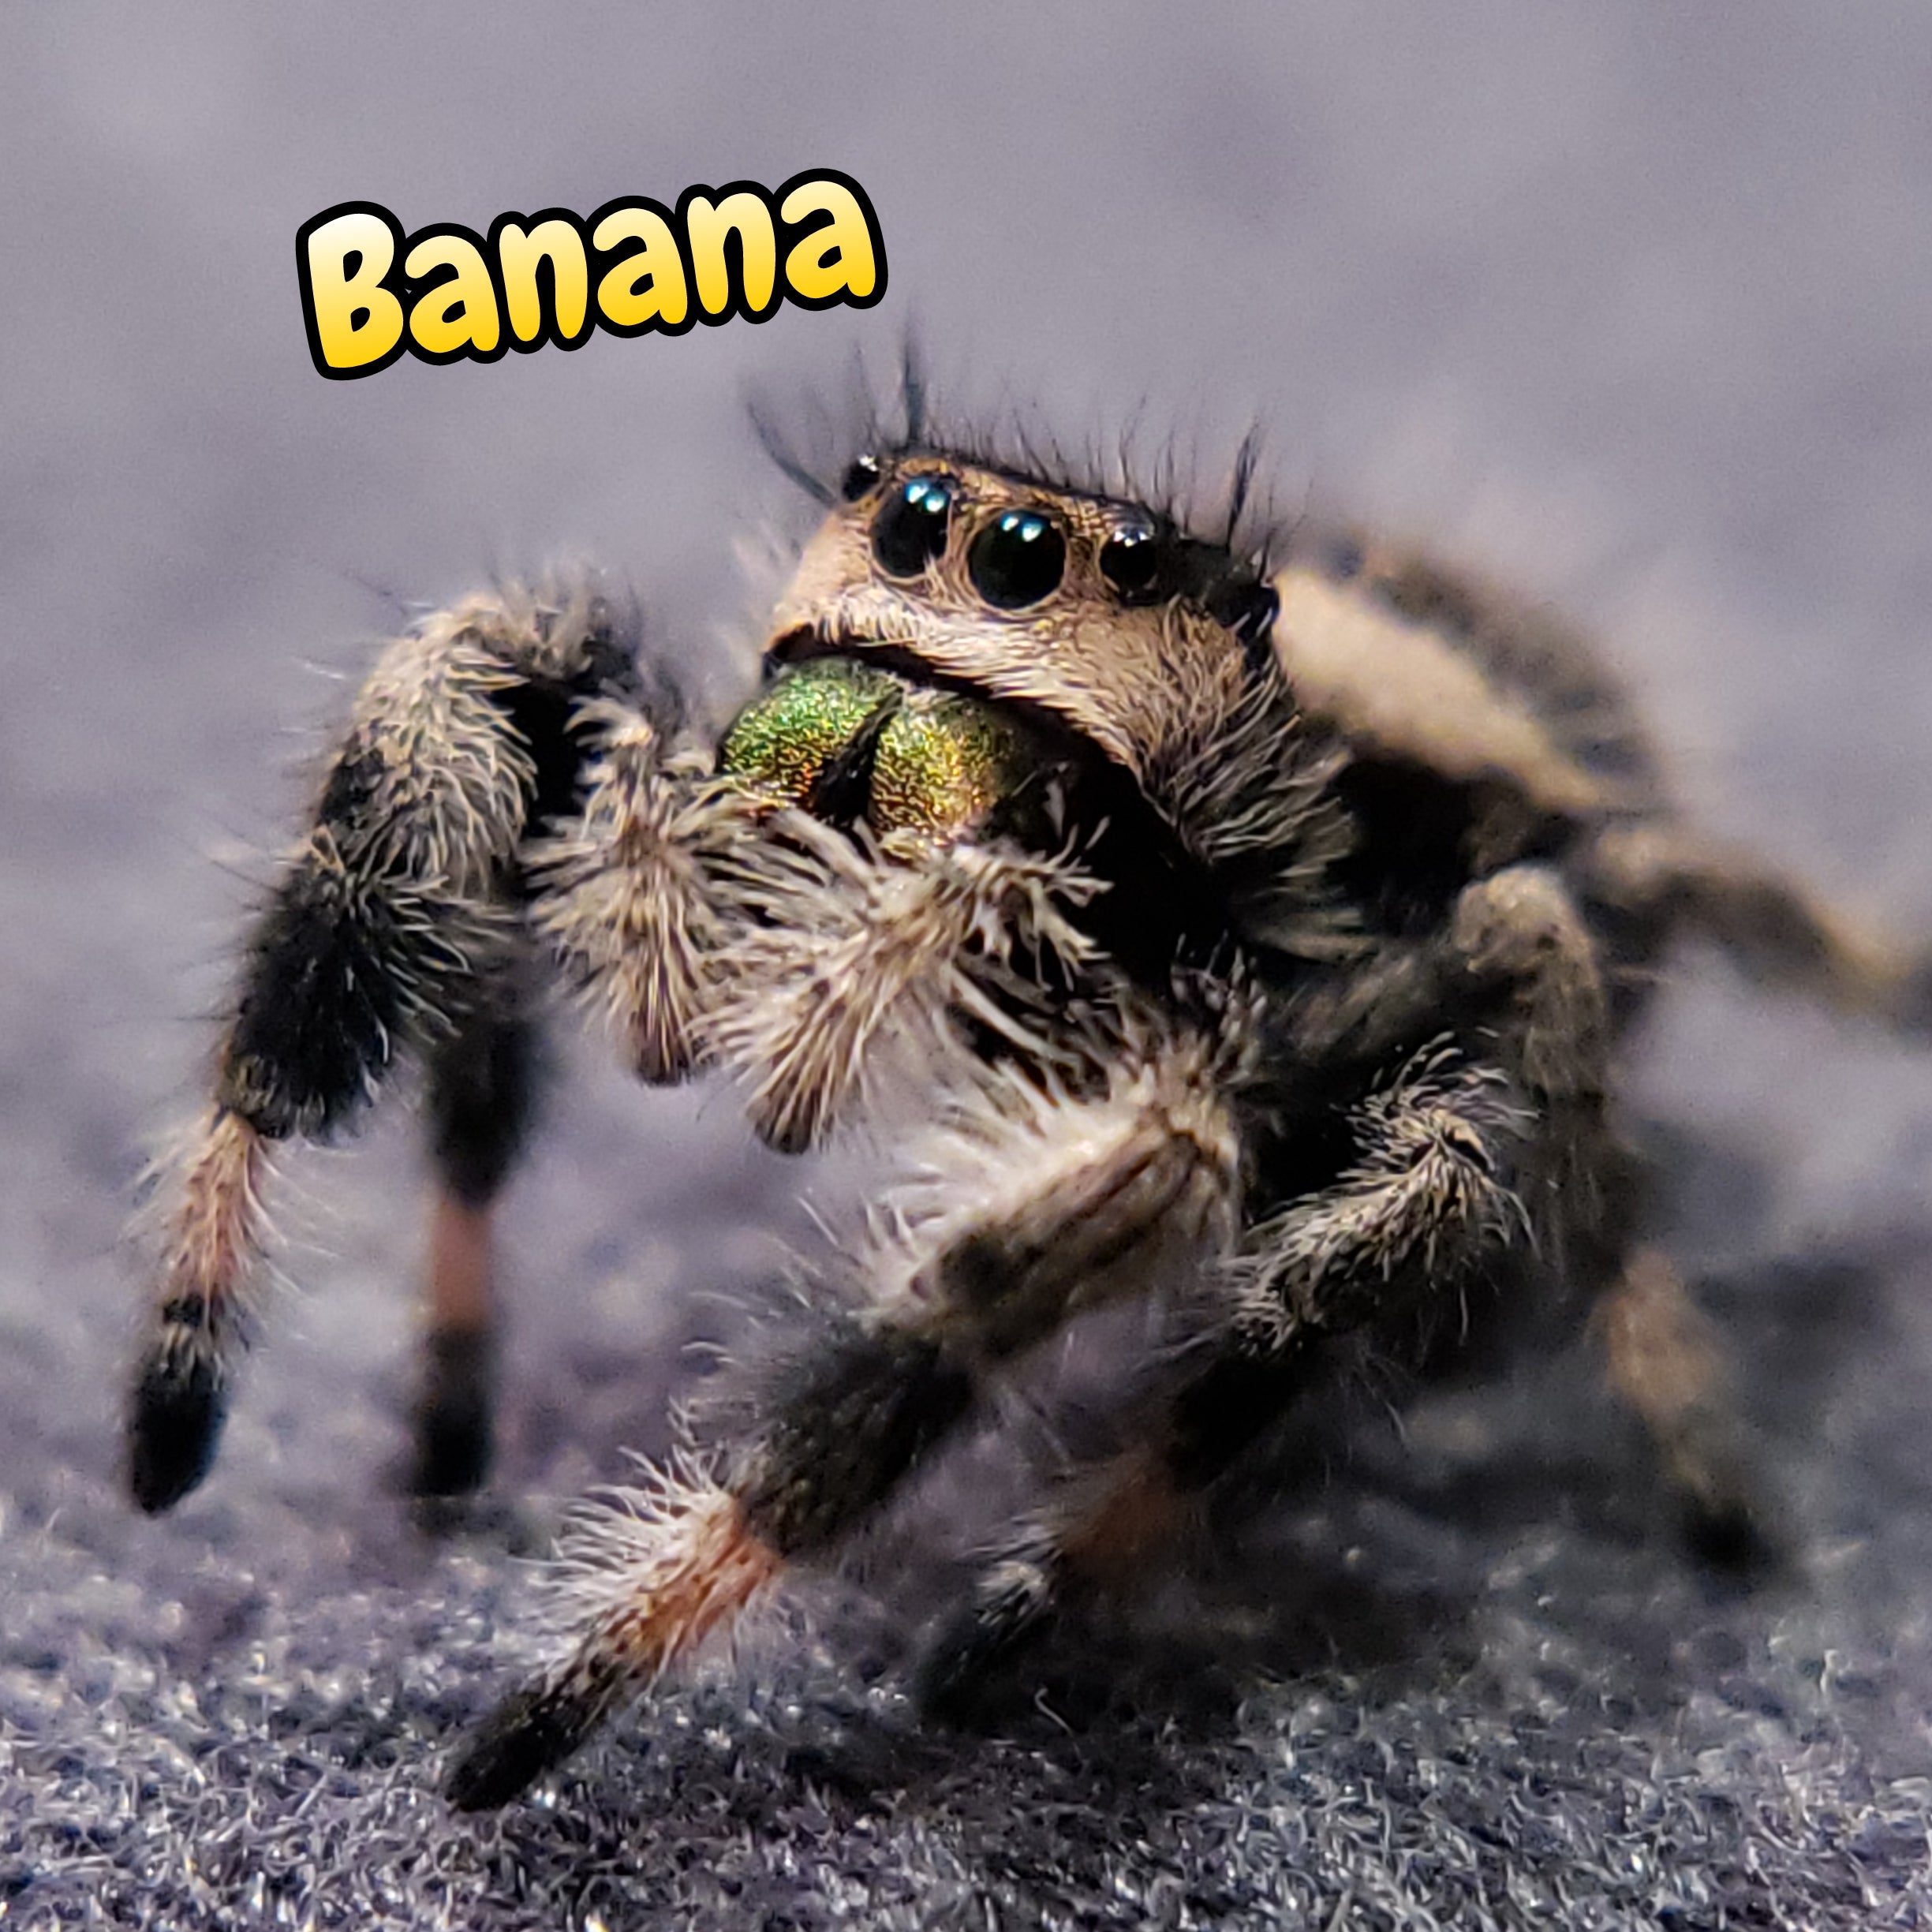 Regal Jumping Spider "Banana"